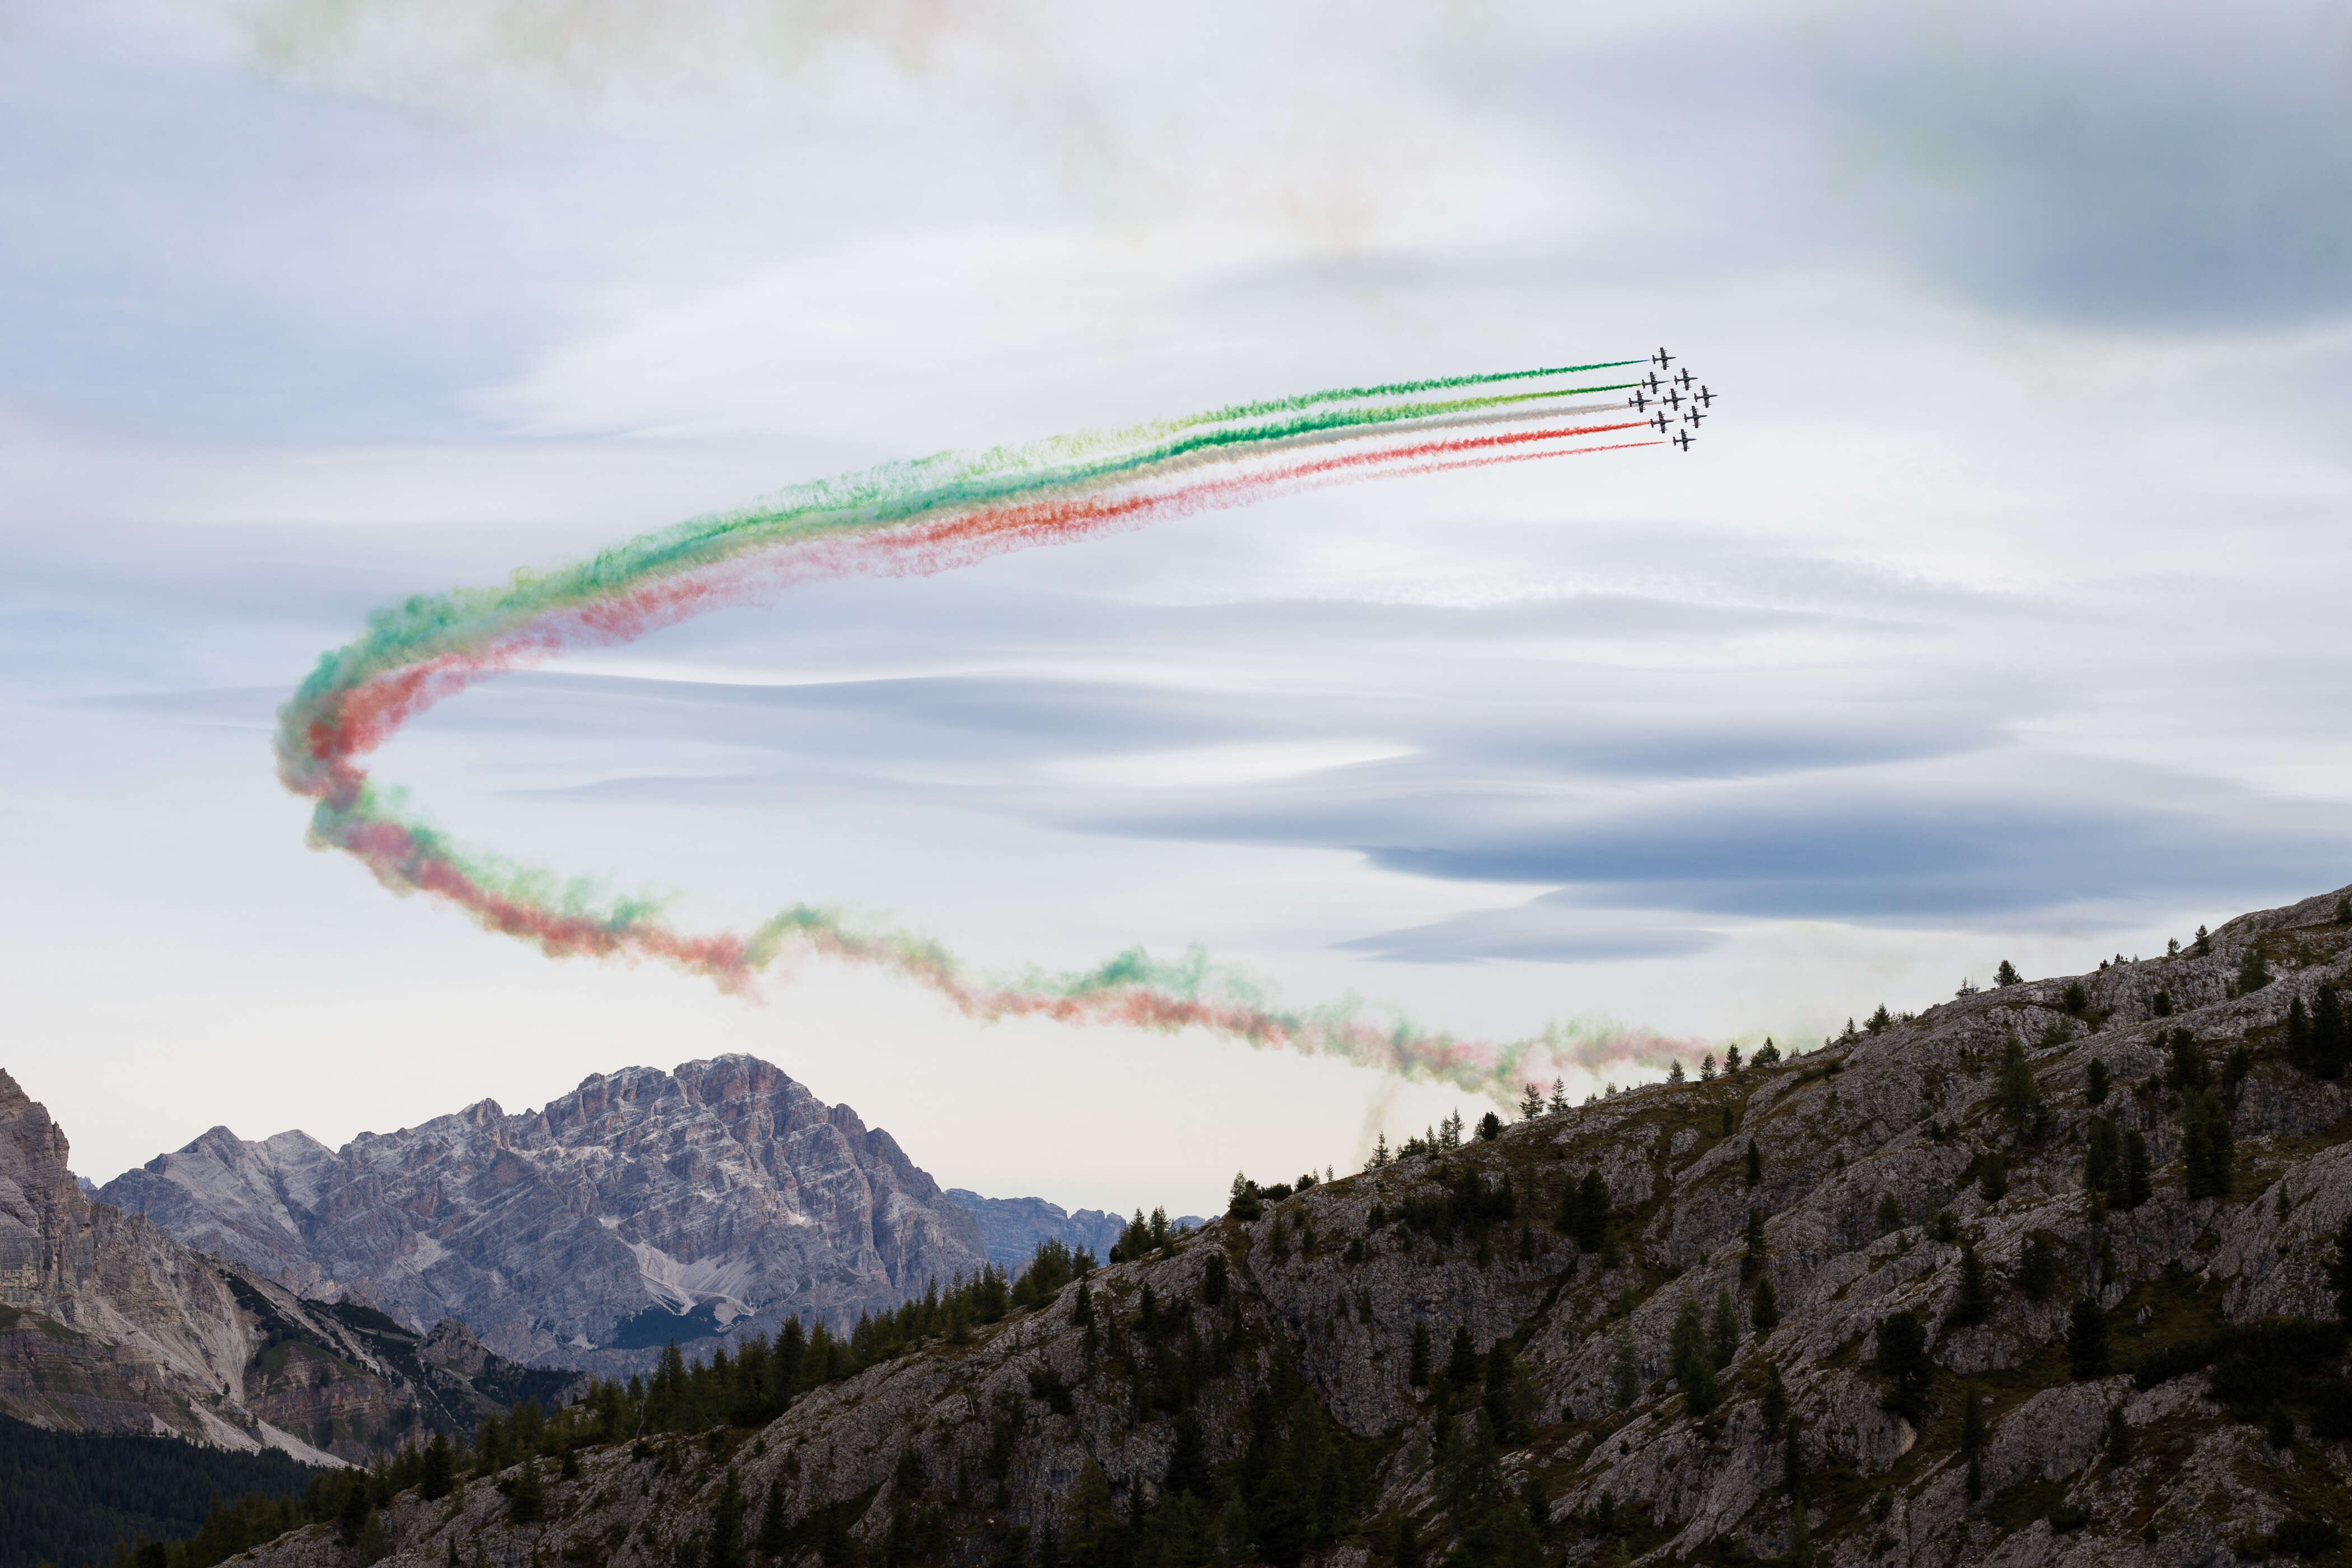 italienischer Kunstflugstaffel Formationsflug